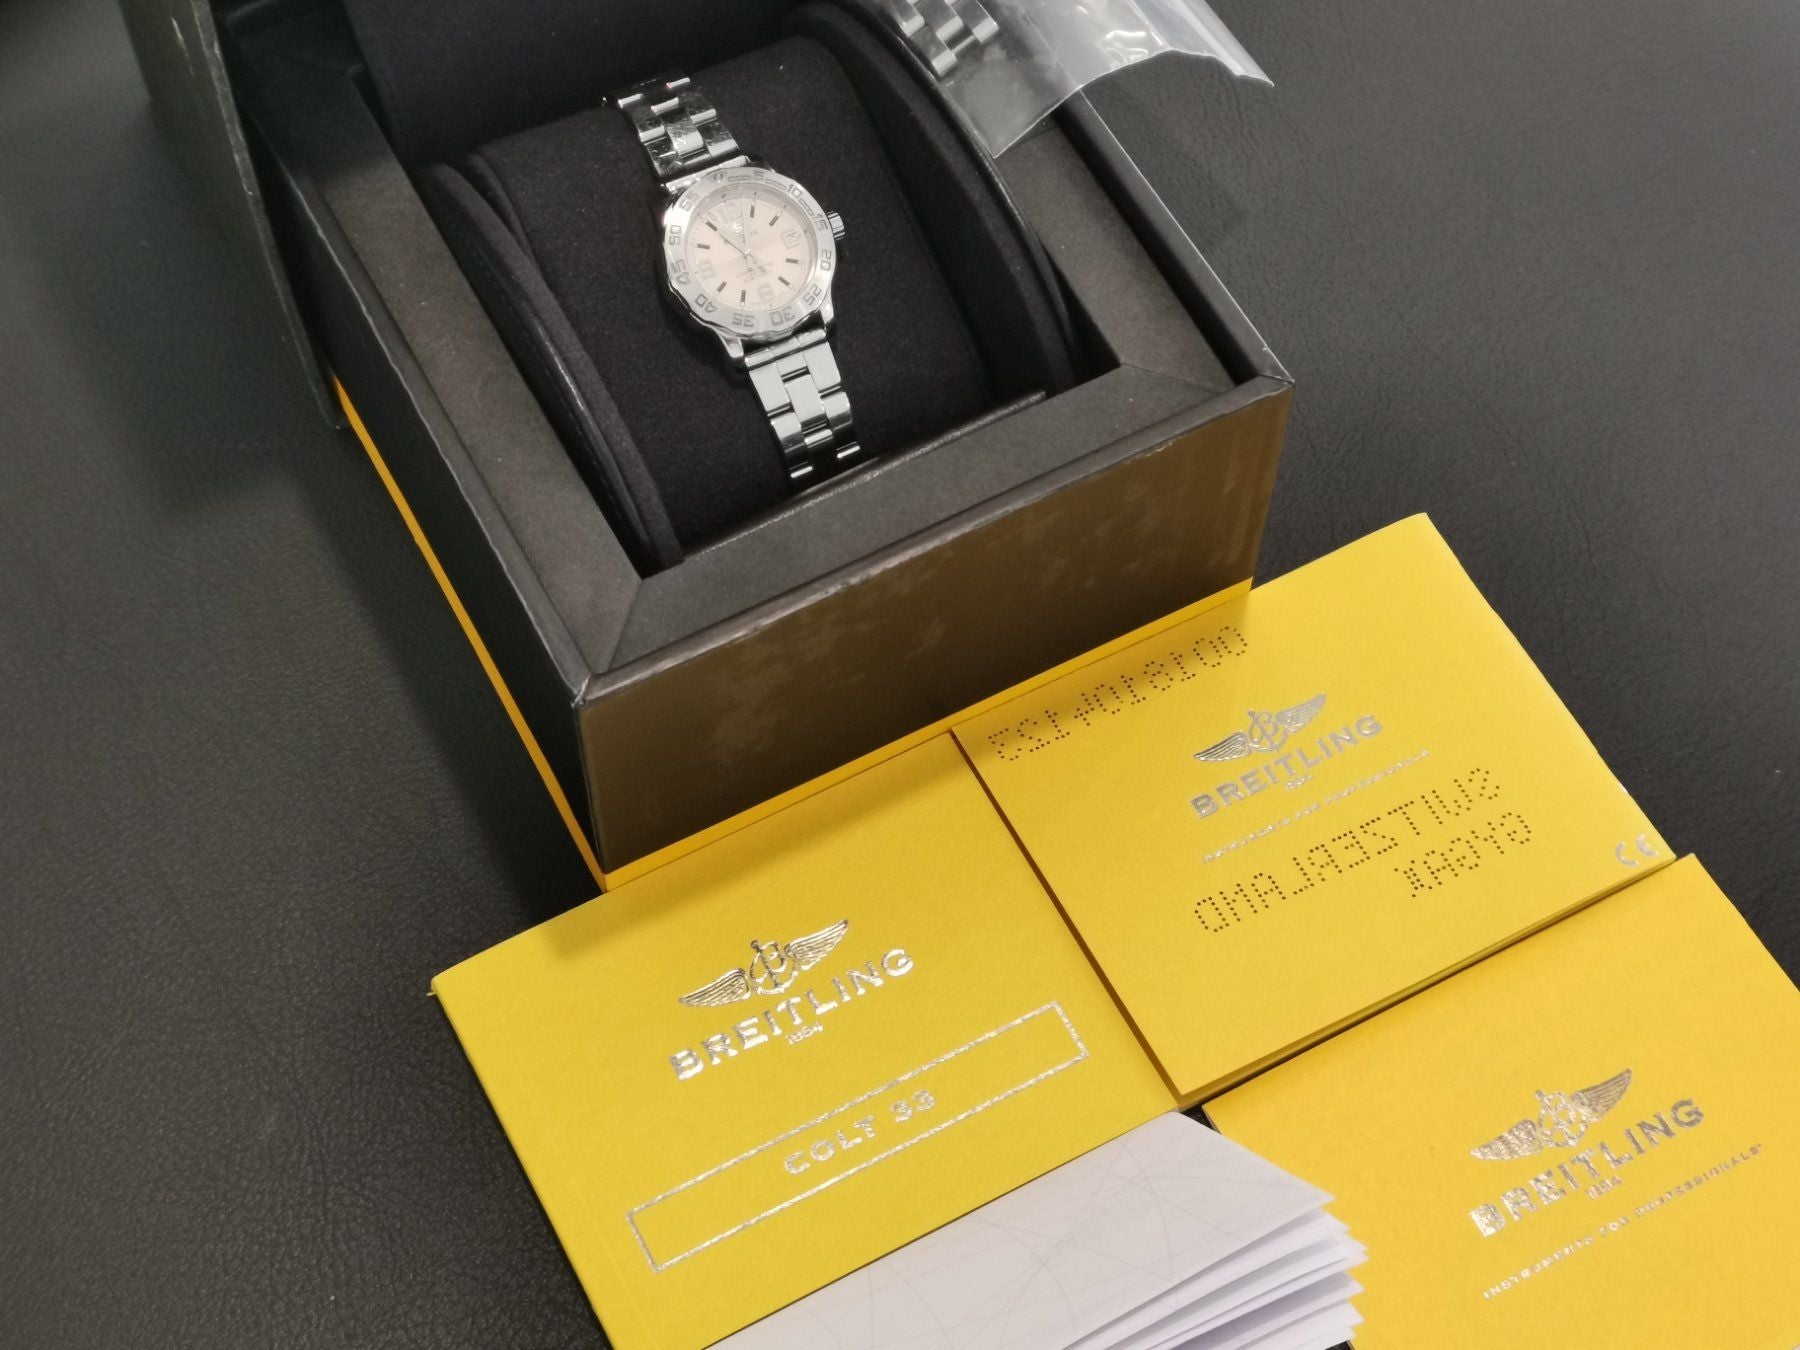 Breitling Colt women's watch